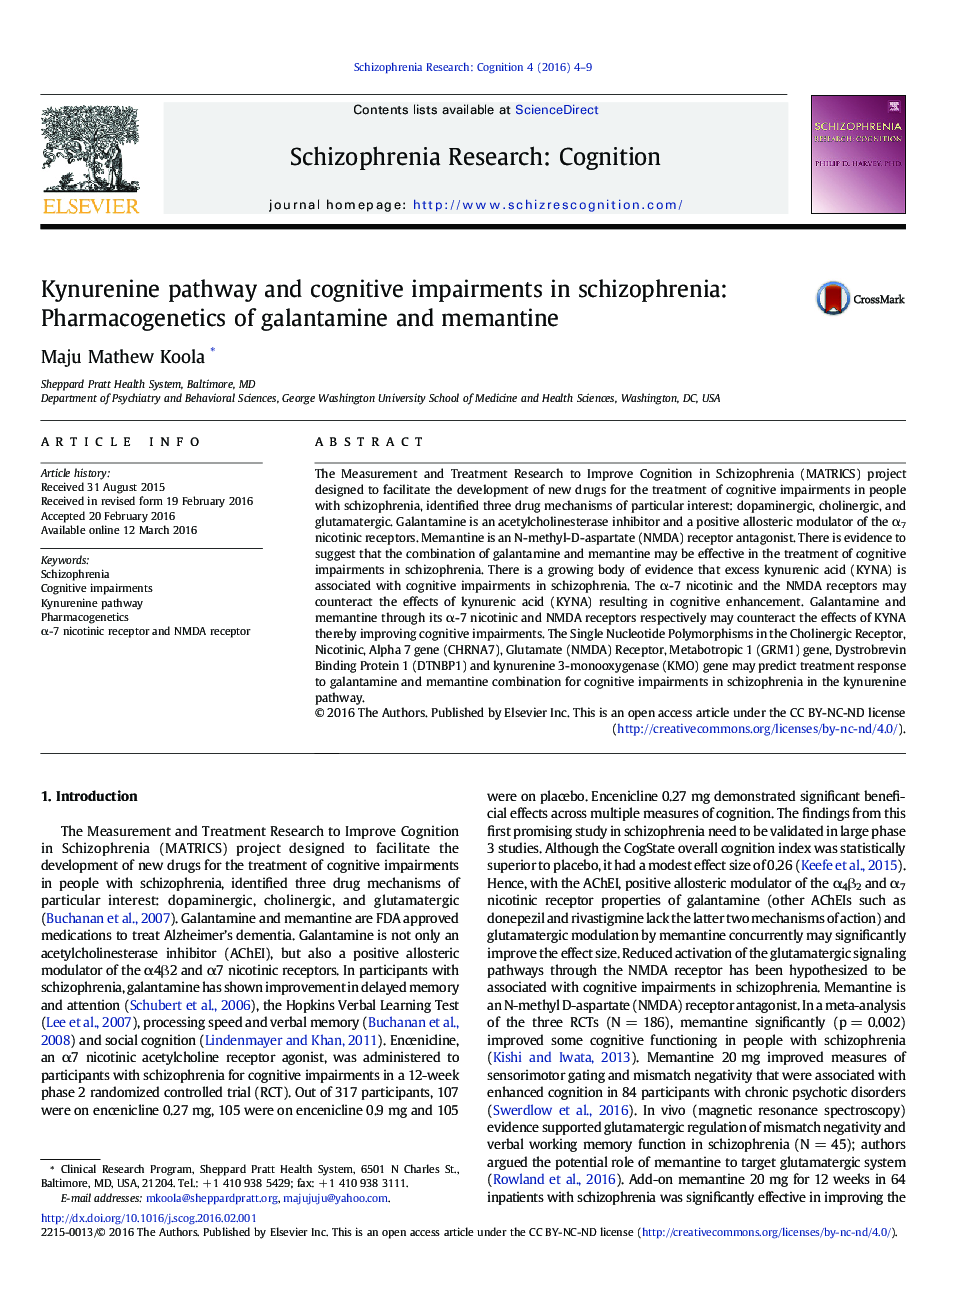 Kynurenine pathway and cognitive impairments in schizophrenia: Pharmacogenetics of galantamine and memantine